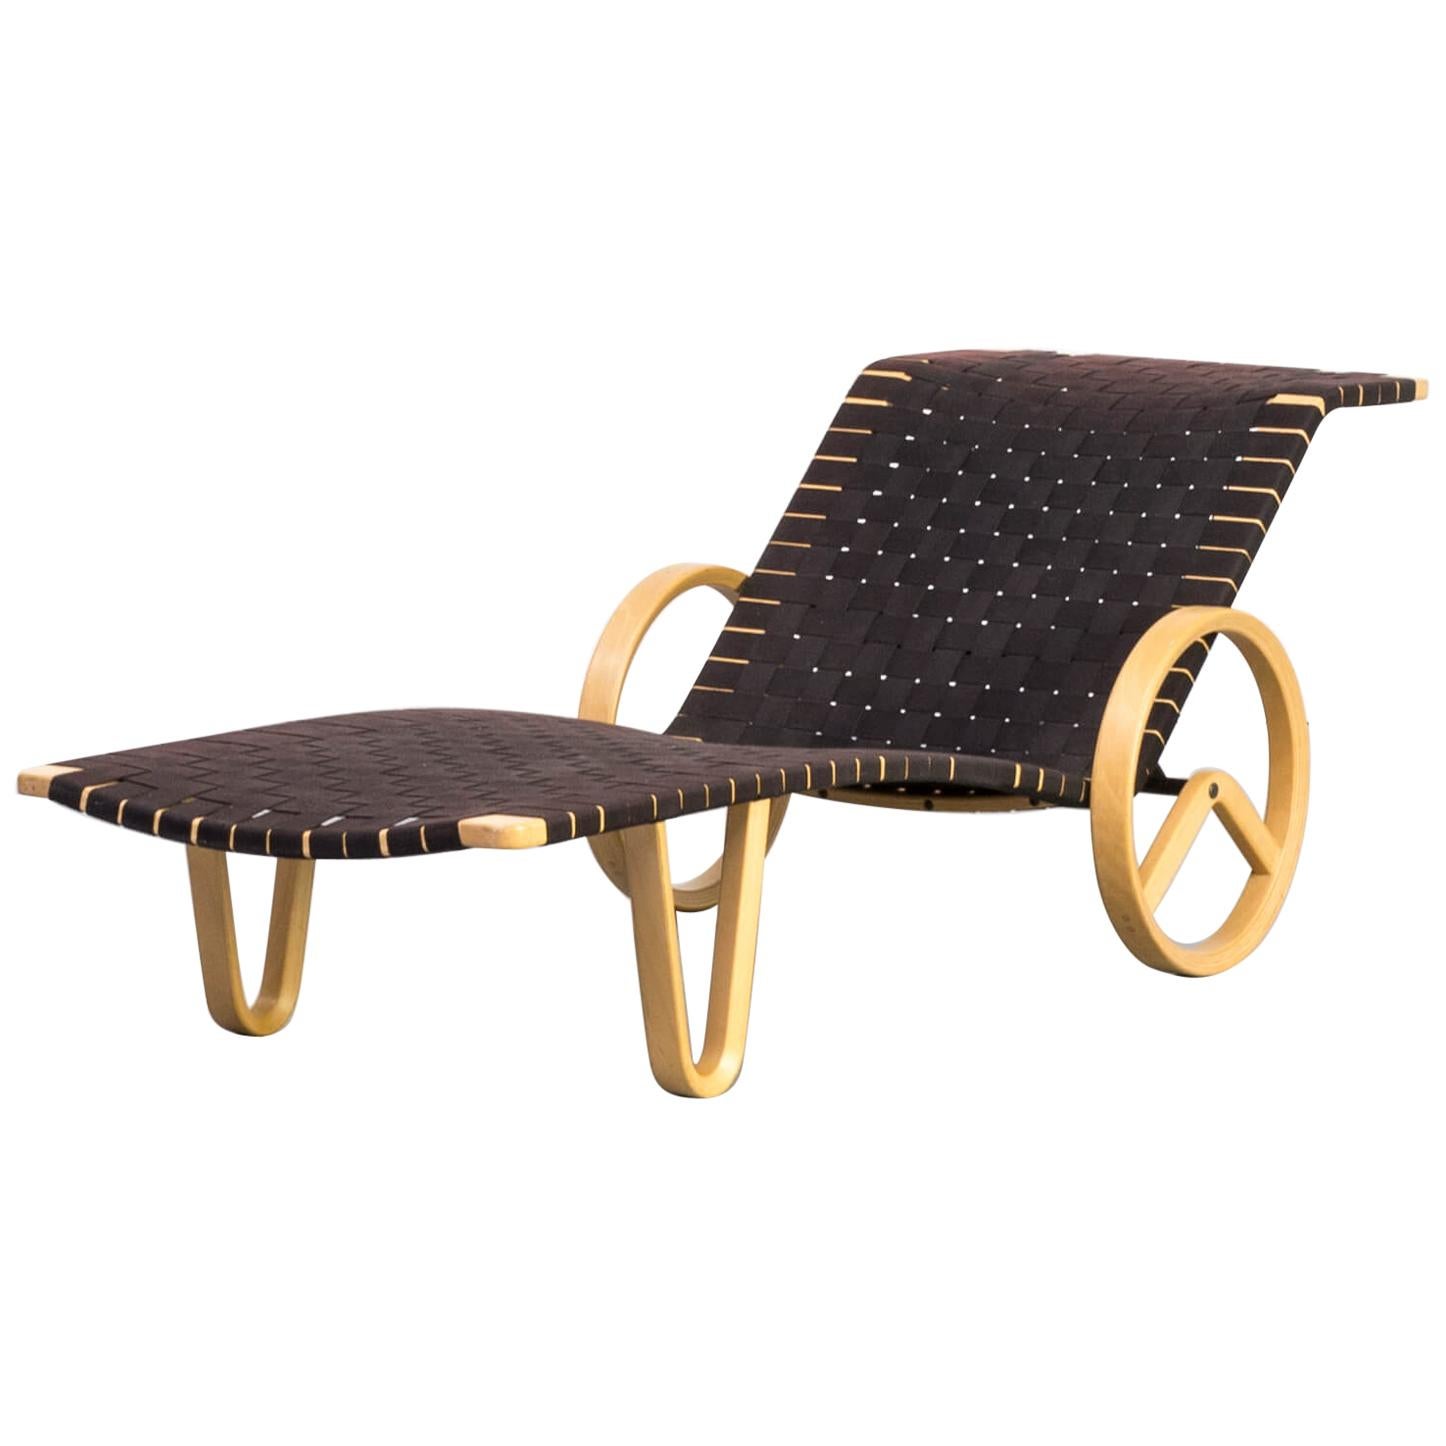 1960s chaise longue by Thygesen & Sørensen